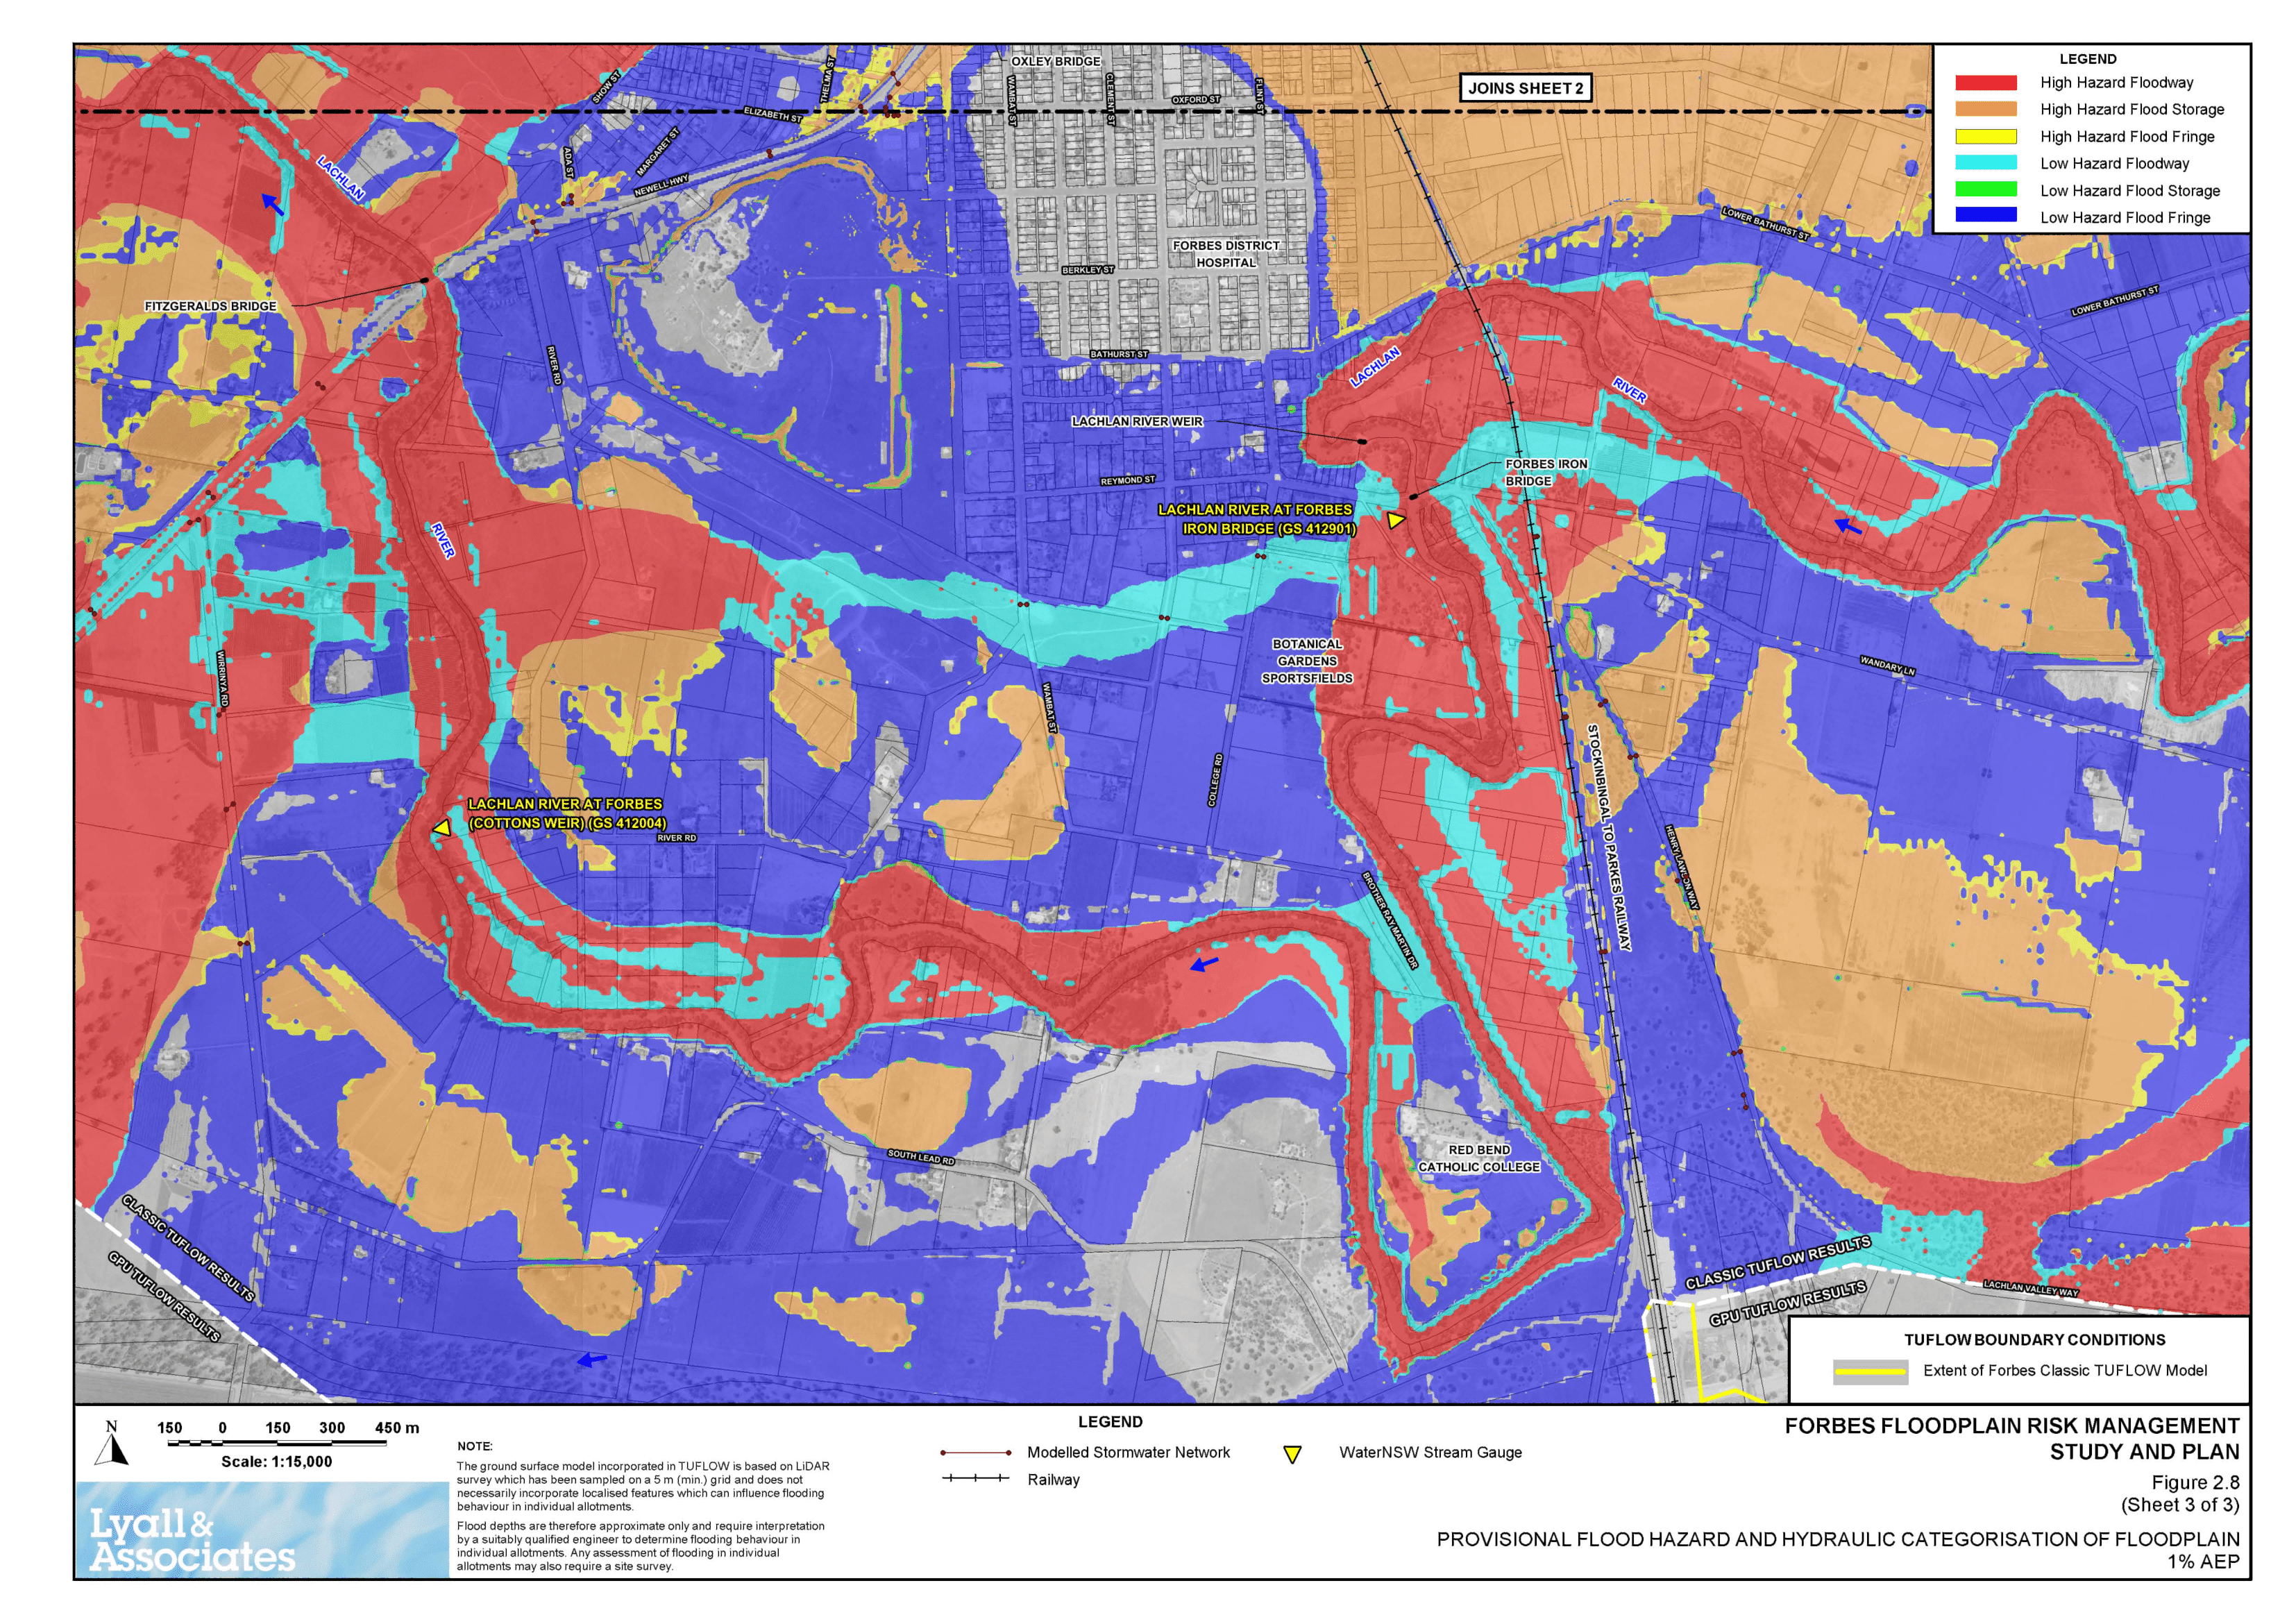 Figure 2.8 (3 Sheets) - Flood Hazard and Categorisation of Floodplain - 3